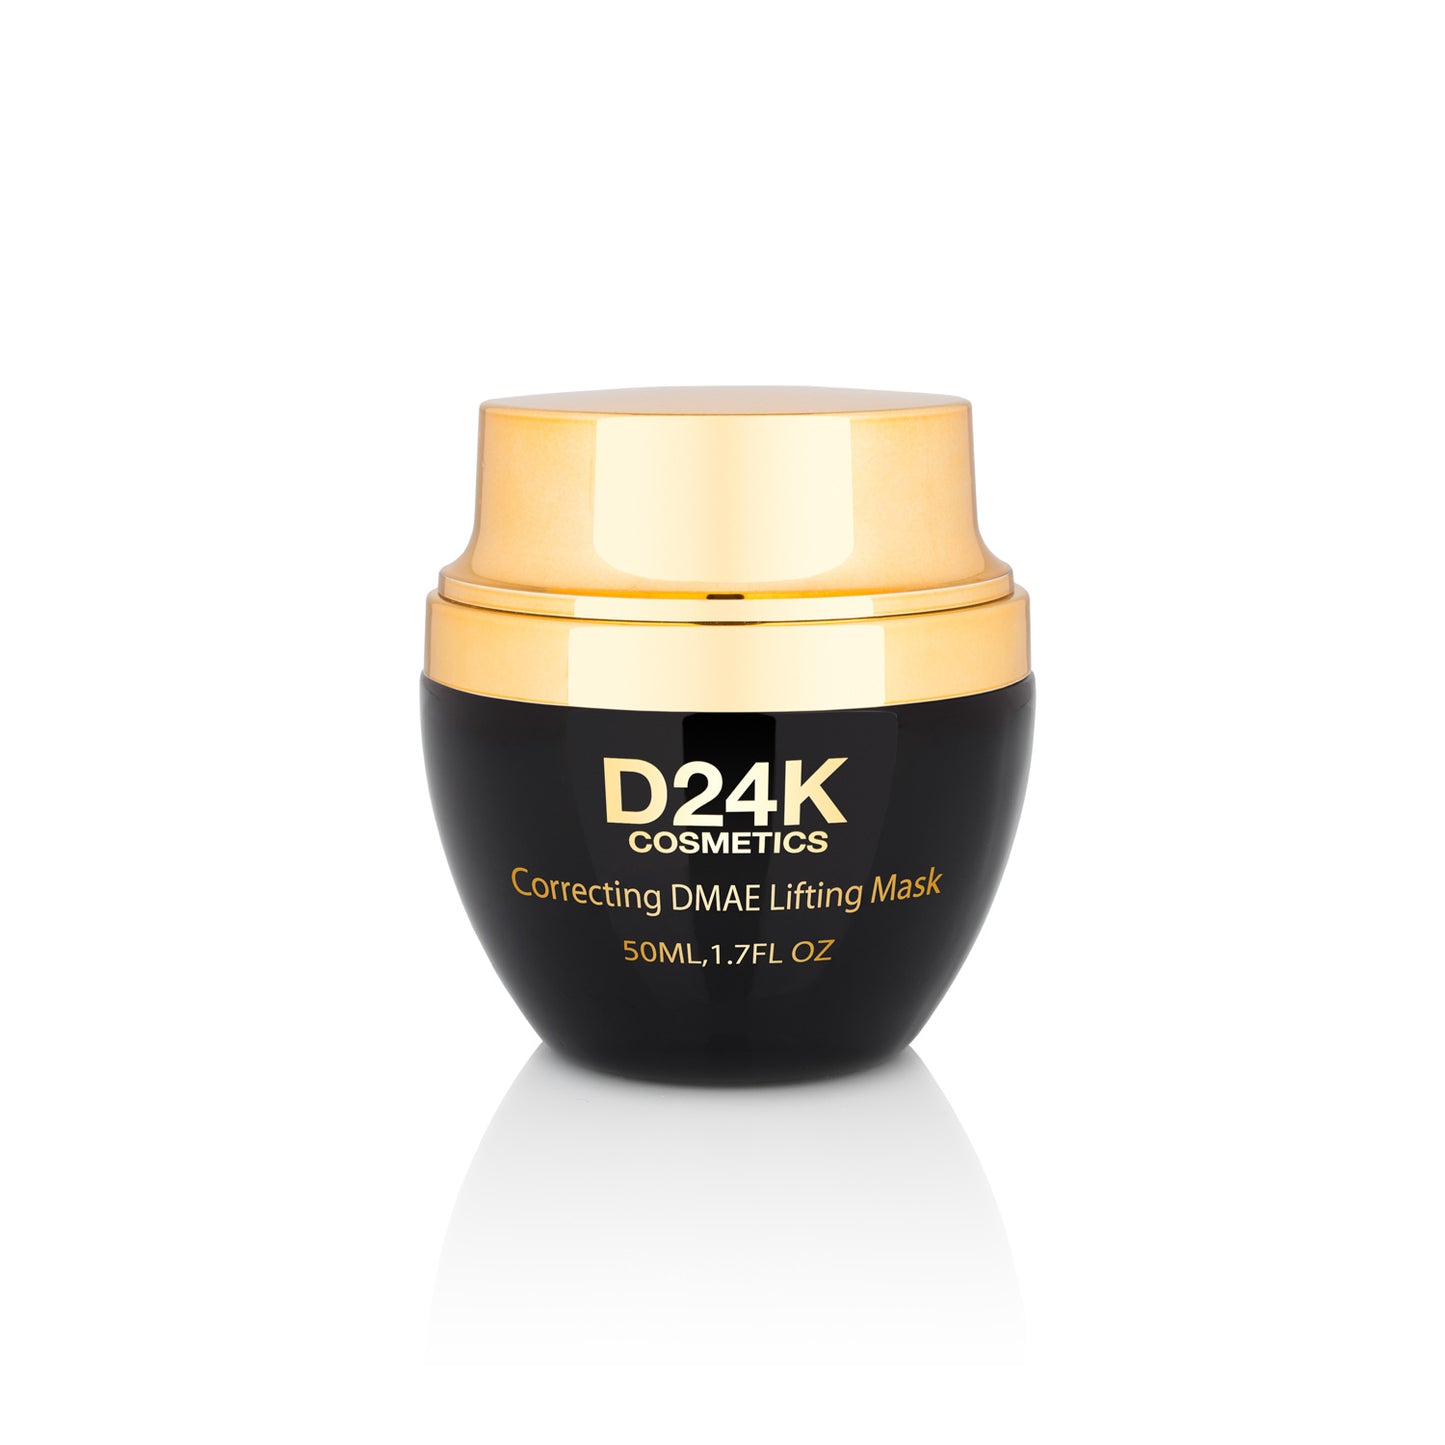 D24K Correcting DMAE Lifting Mask